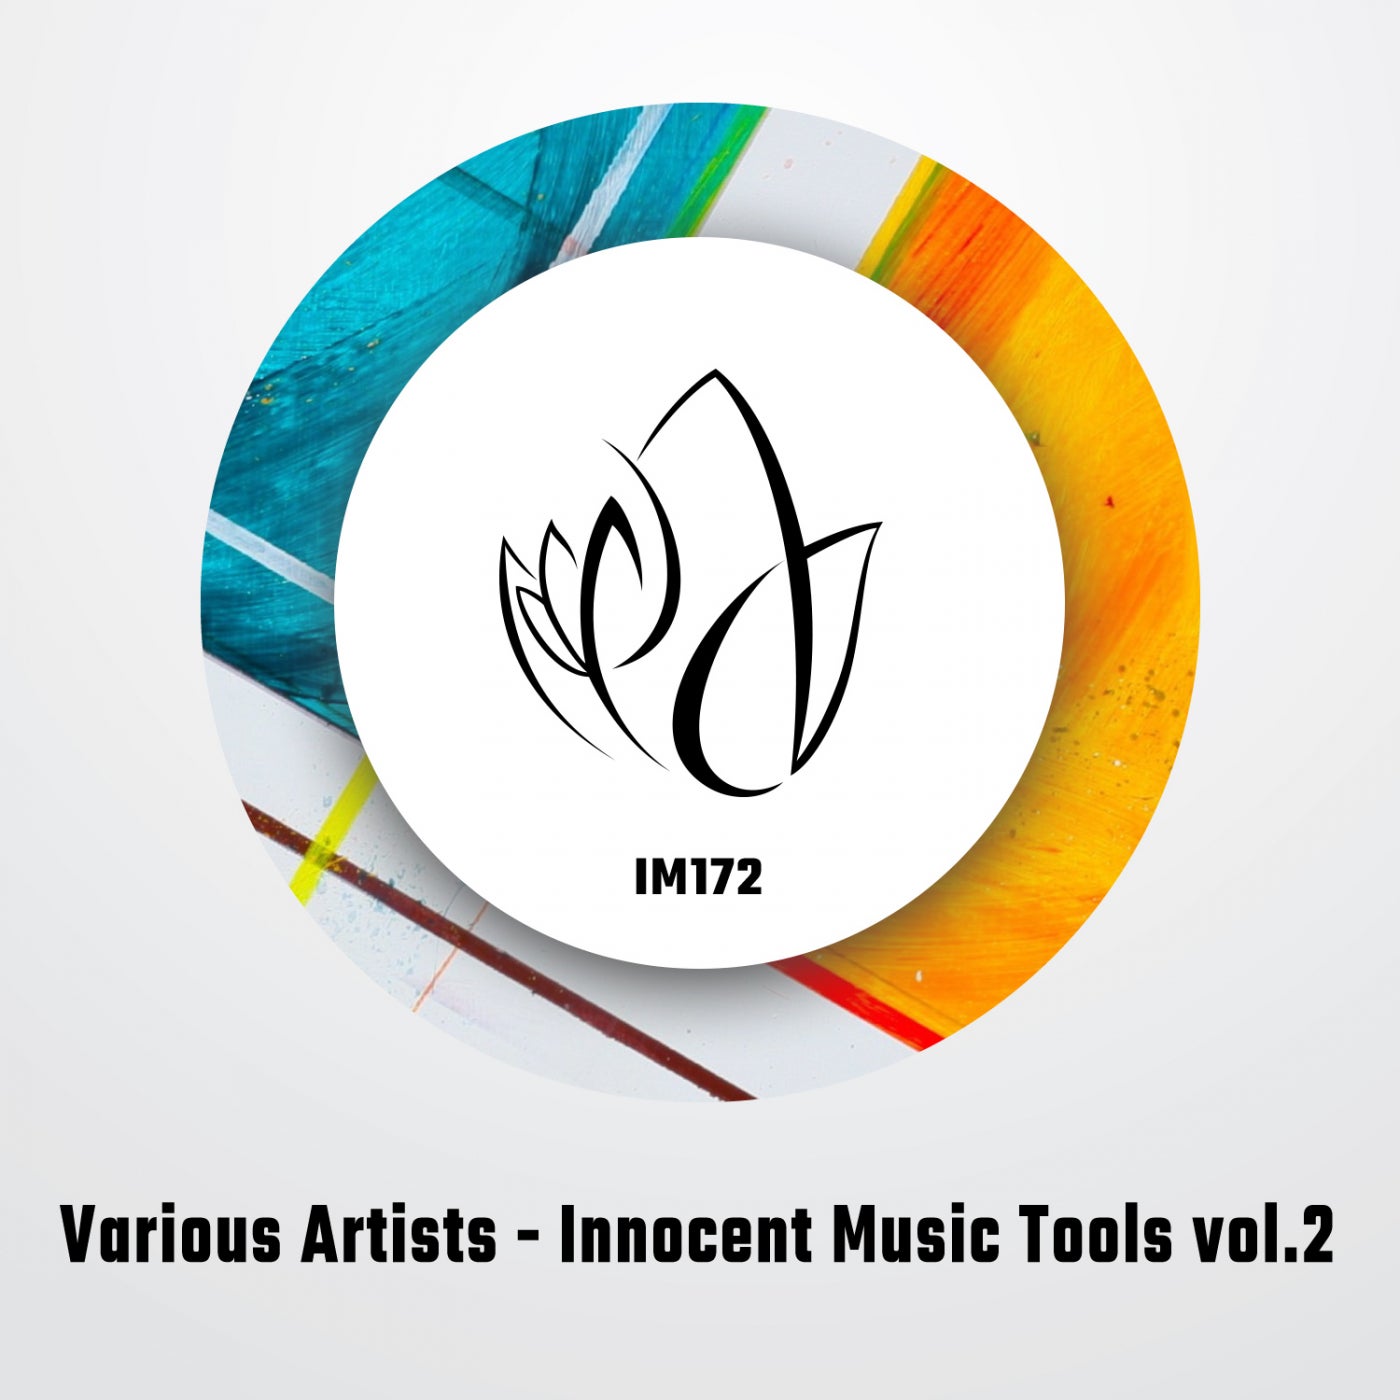 Innocent Music Tools vol.2